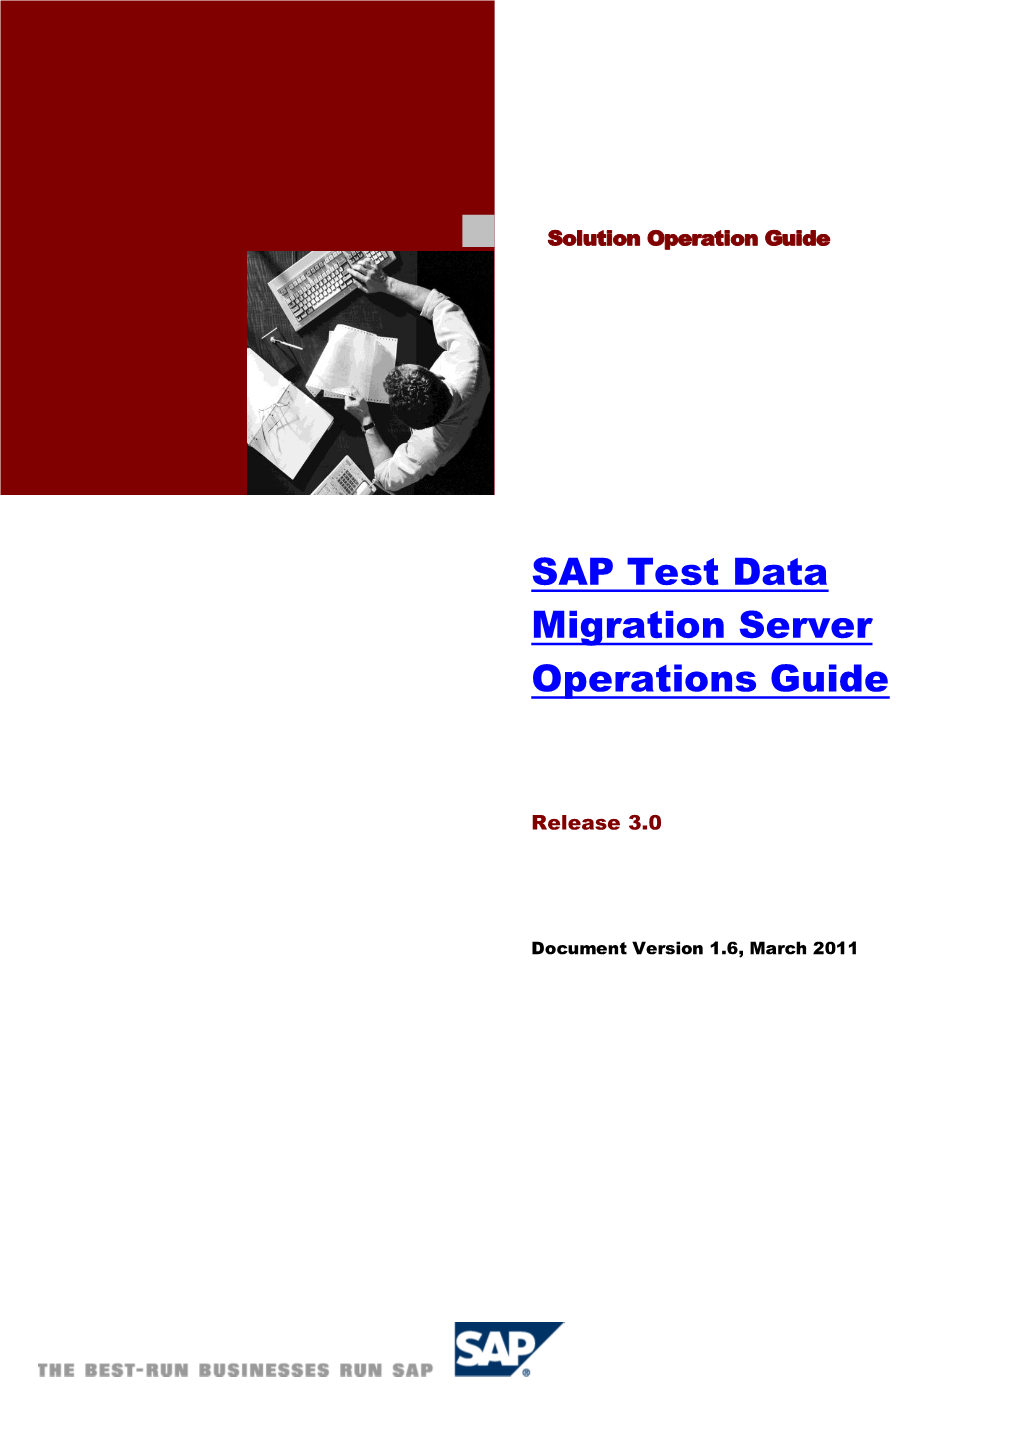 SAP Test Data Migration Server Operations Guide